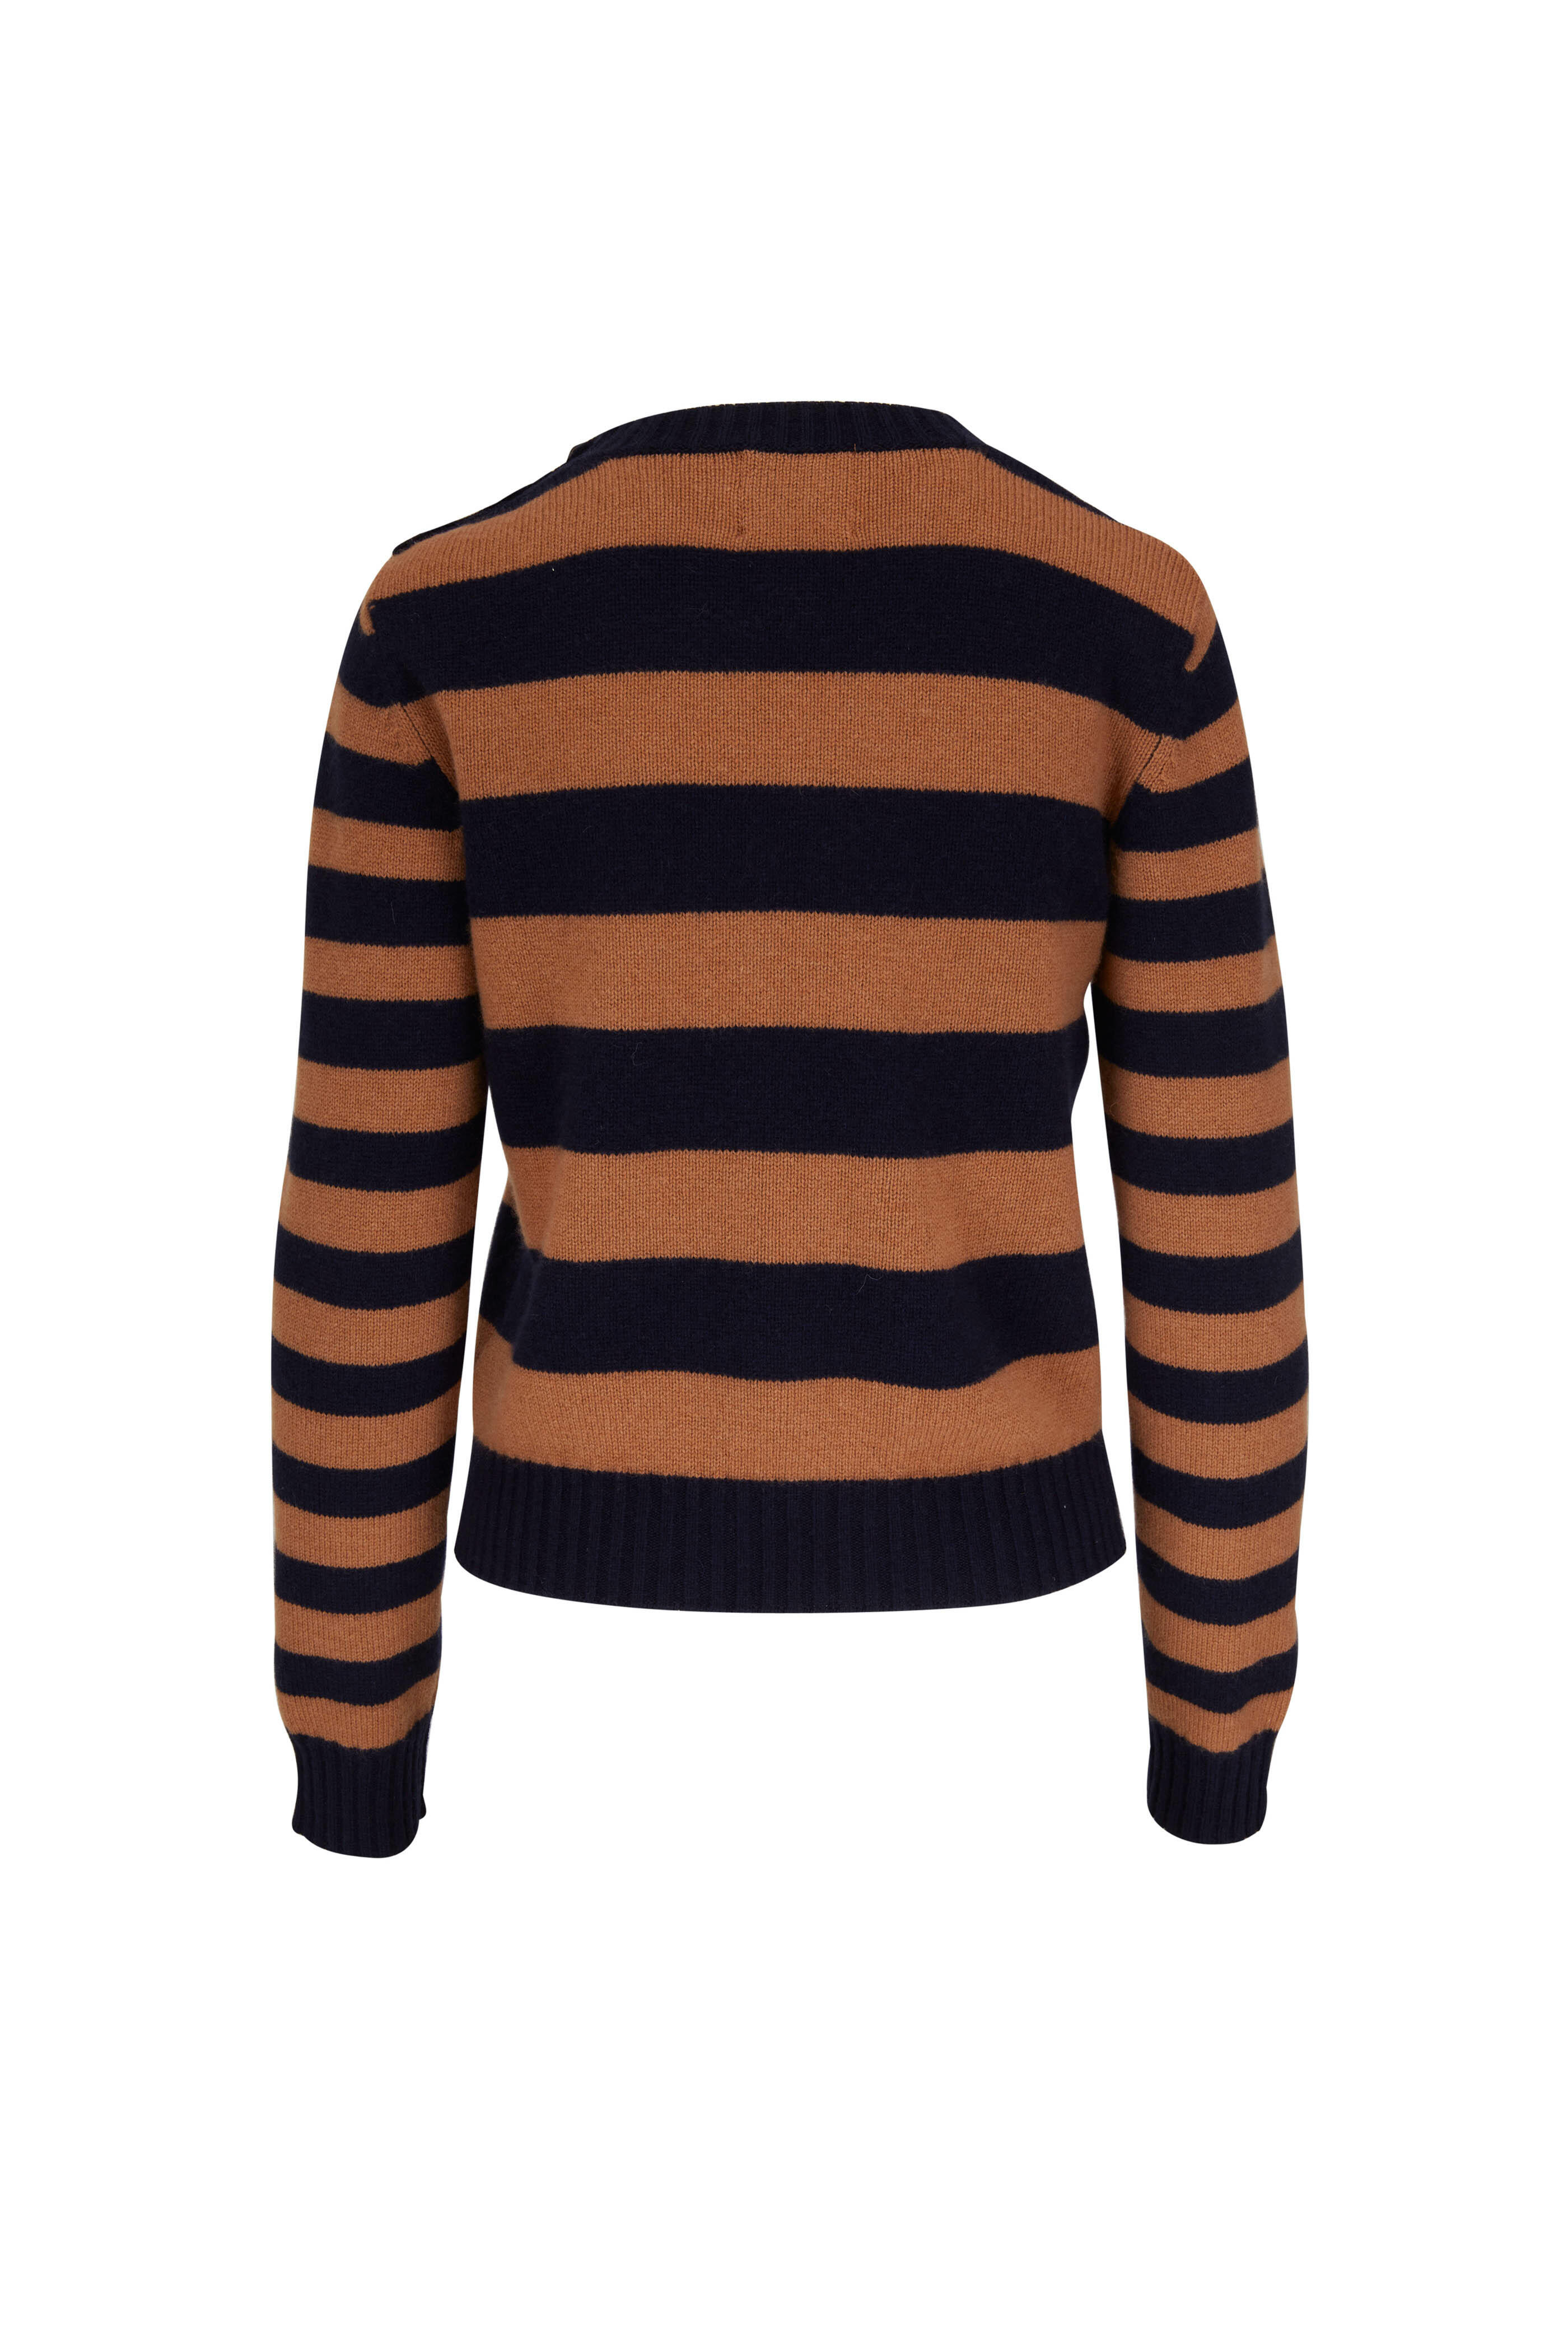 Navy Stripe 1234 Sweater Camel - Jumper & Cashmere